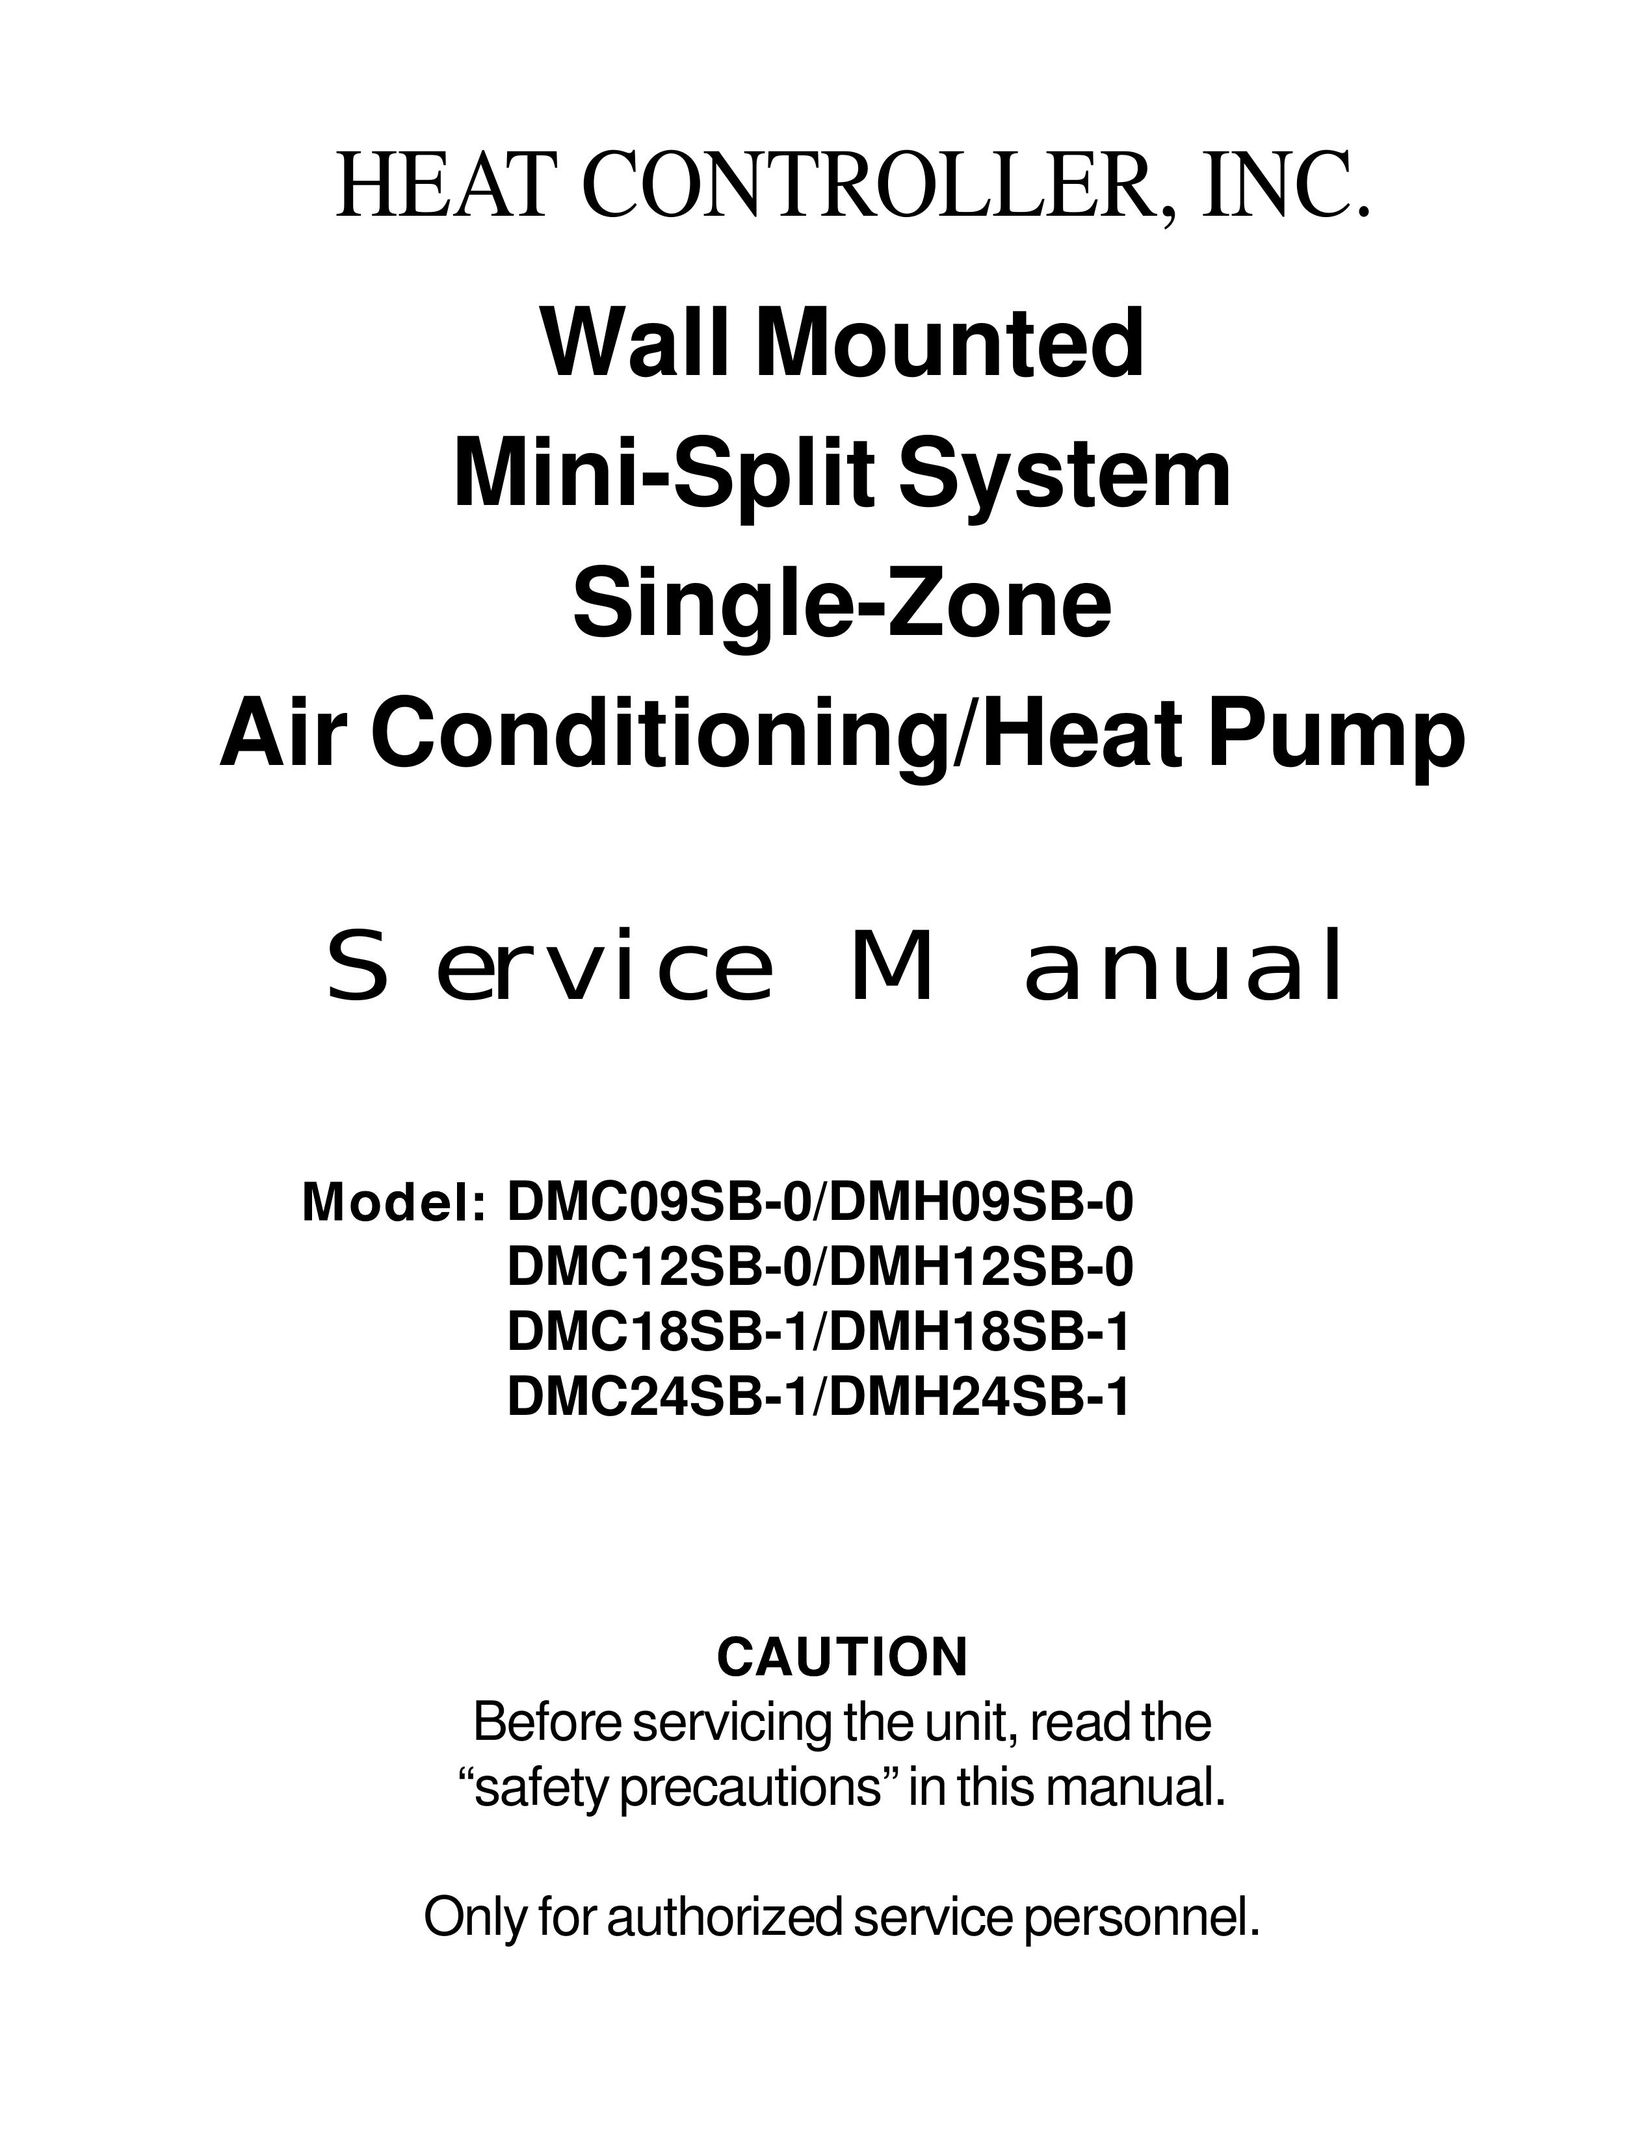 Heat Controller DMC18SB-1 Air Conditioner User Manual